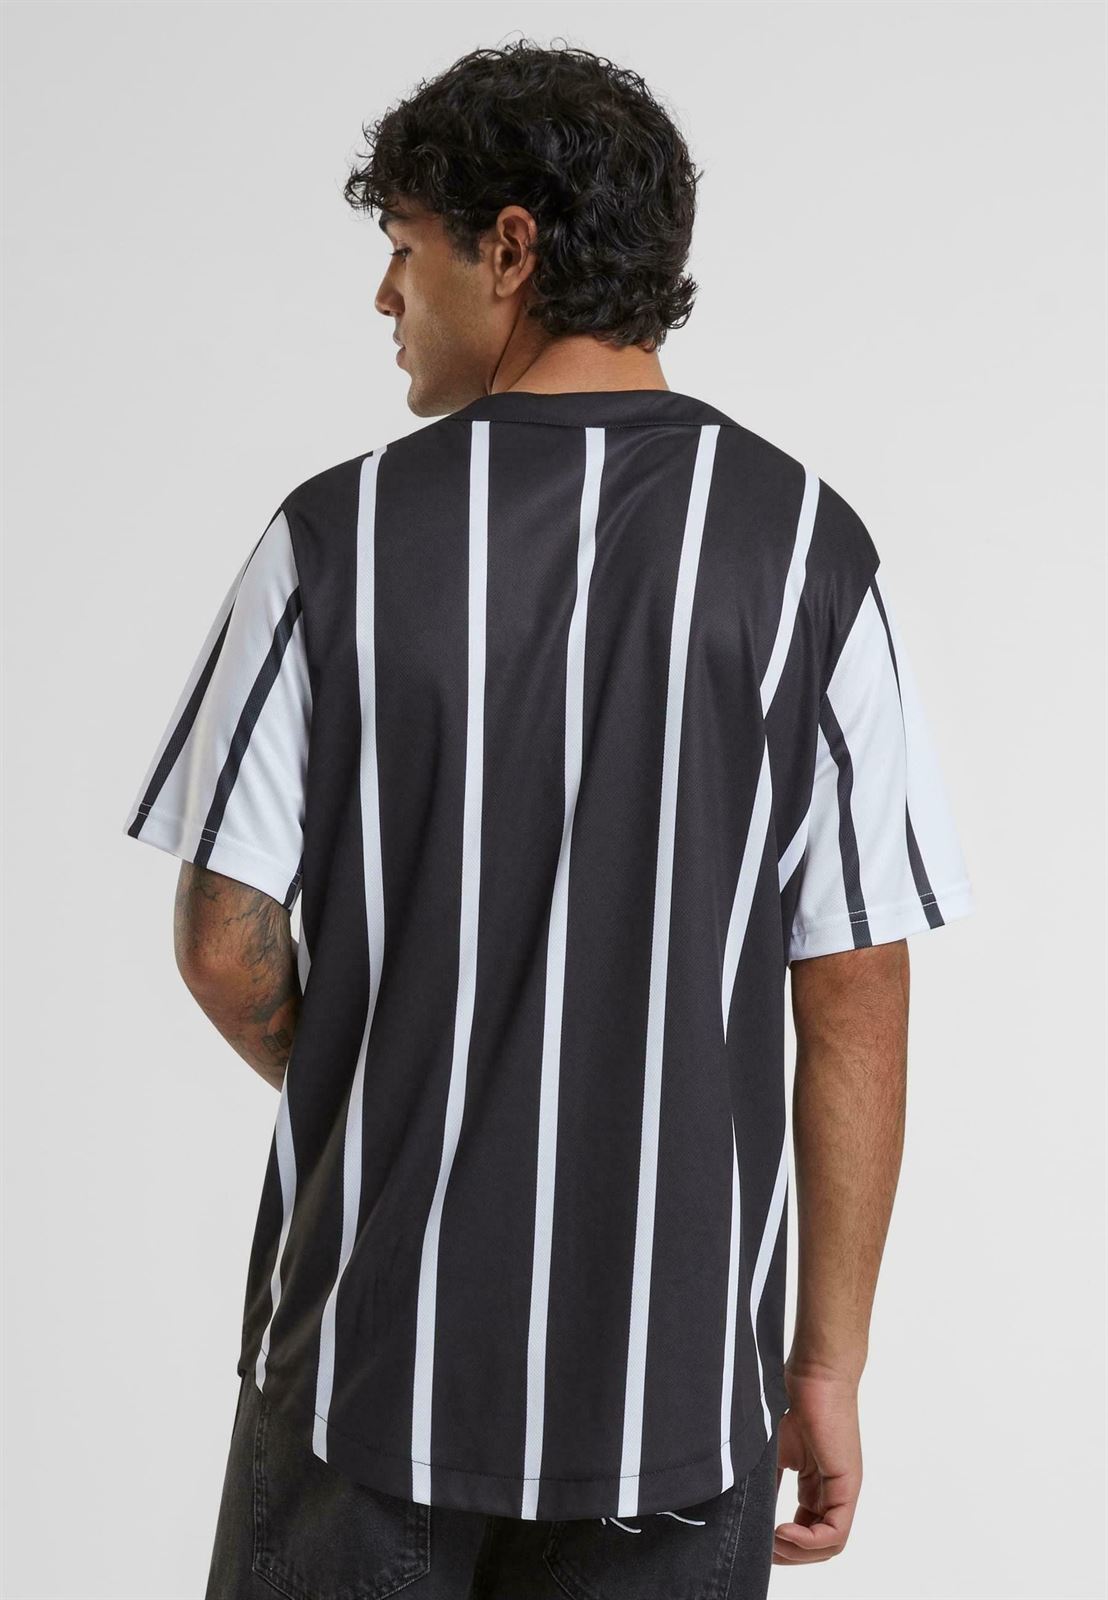 Camiseta Karl Kani 6033552 KM241-040-2 sERIF STRIPED BLOCK BASEBALL BLACK/WHITE - Imagen 3